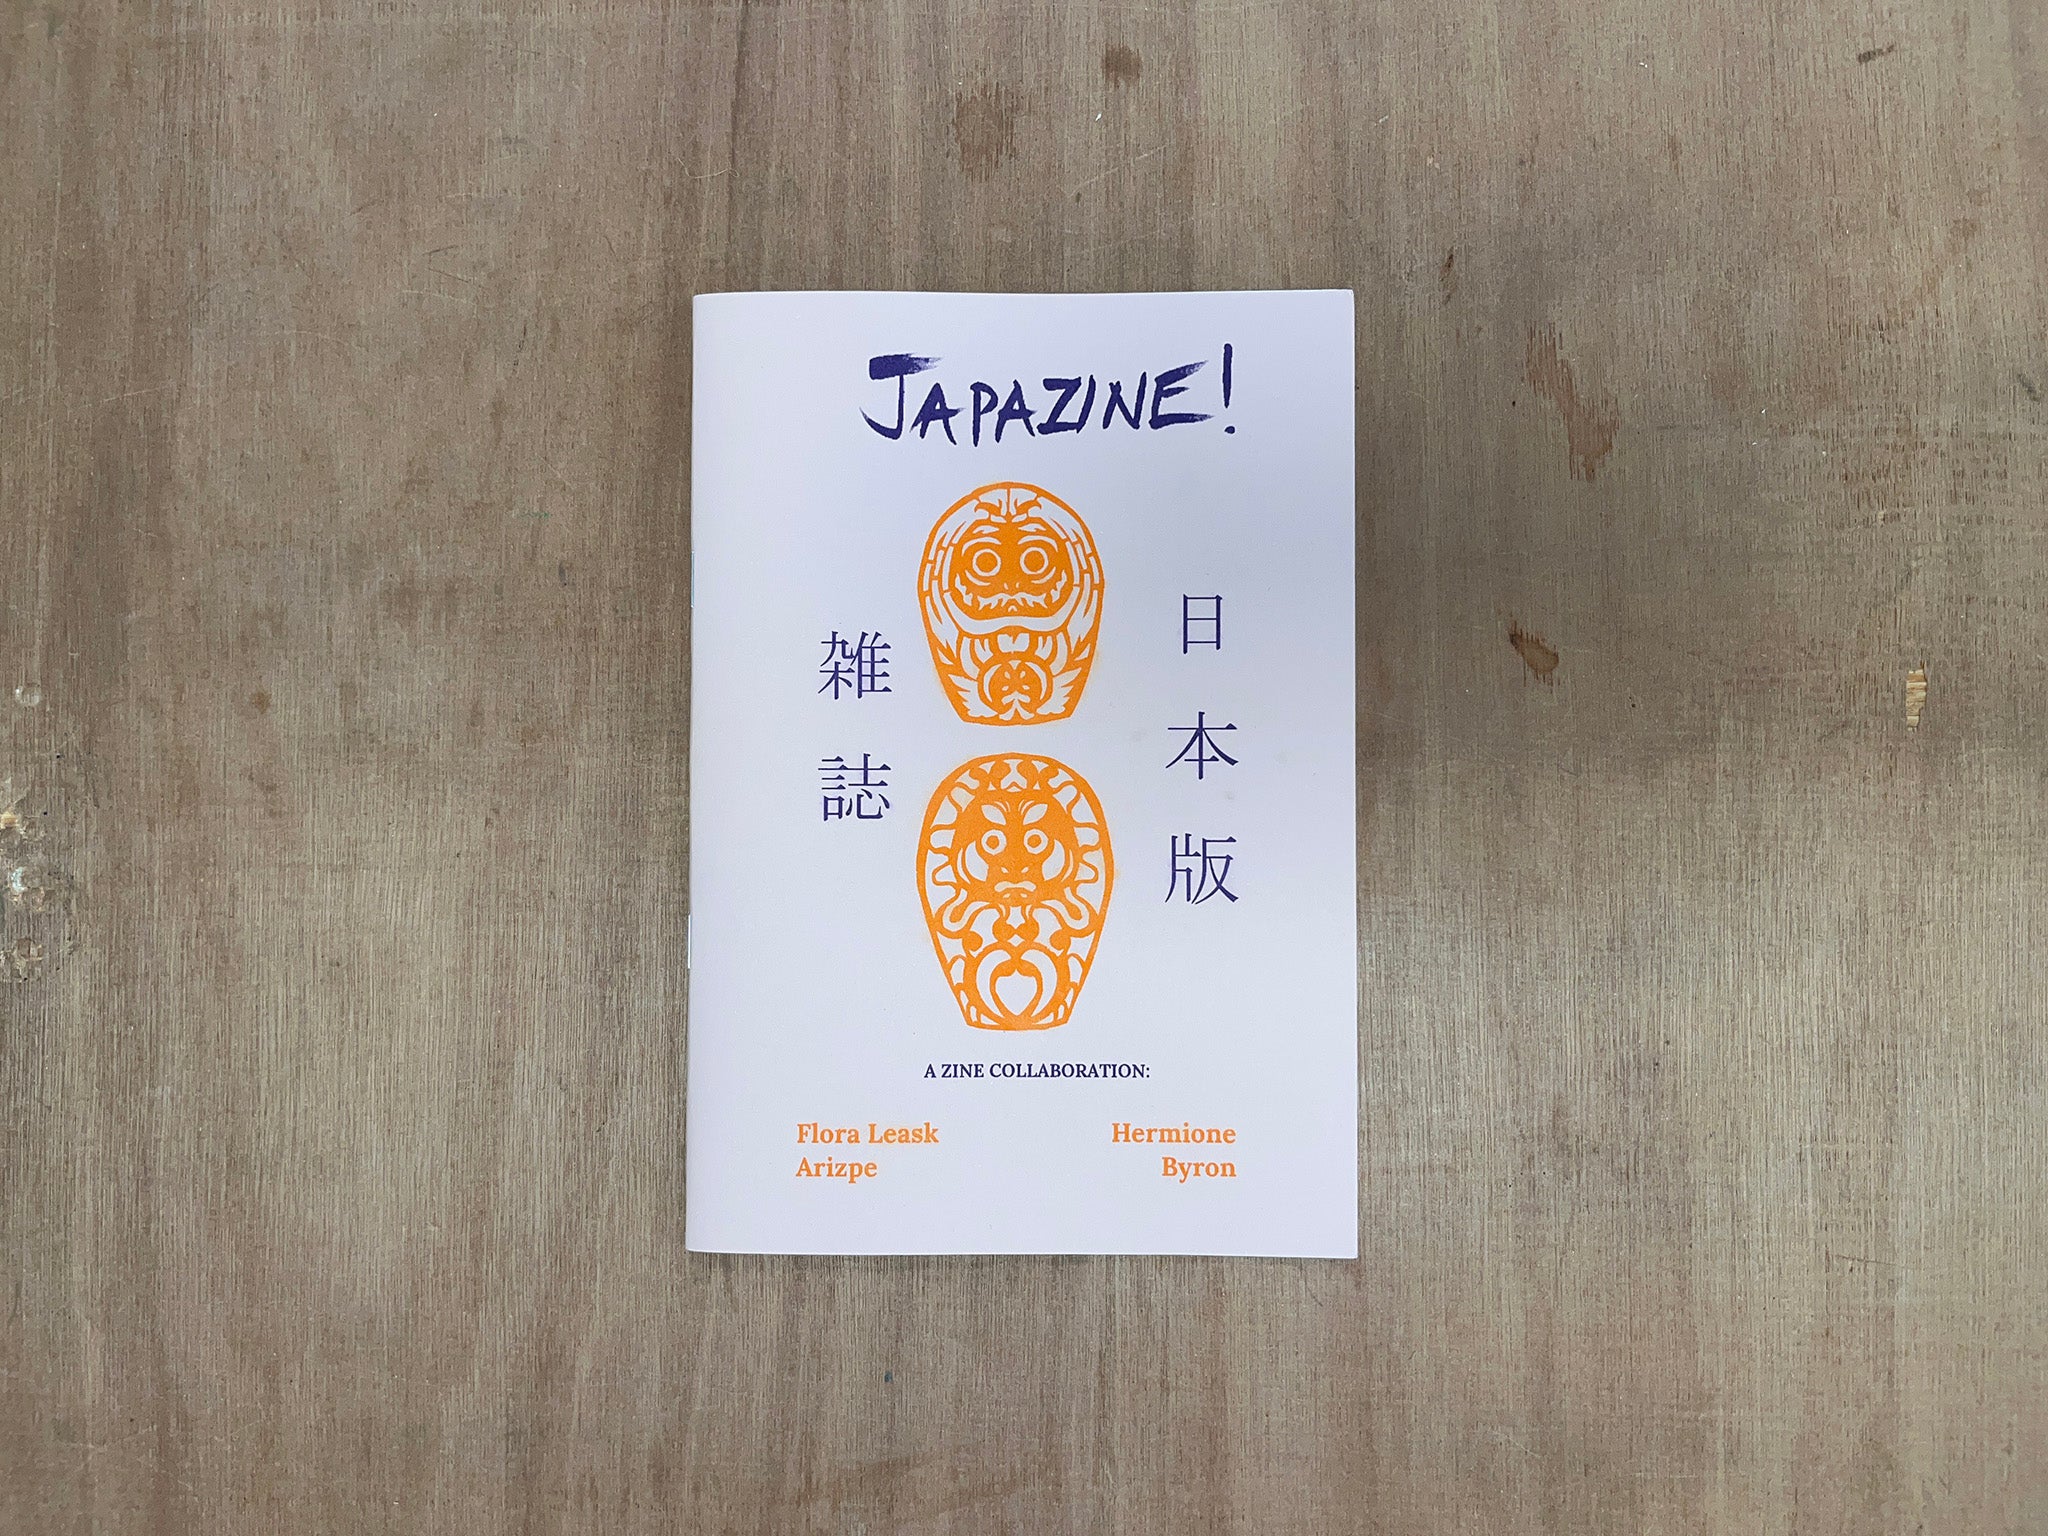 JAPANZINE! by Flora Leask Arizpe & Hermione Byron